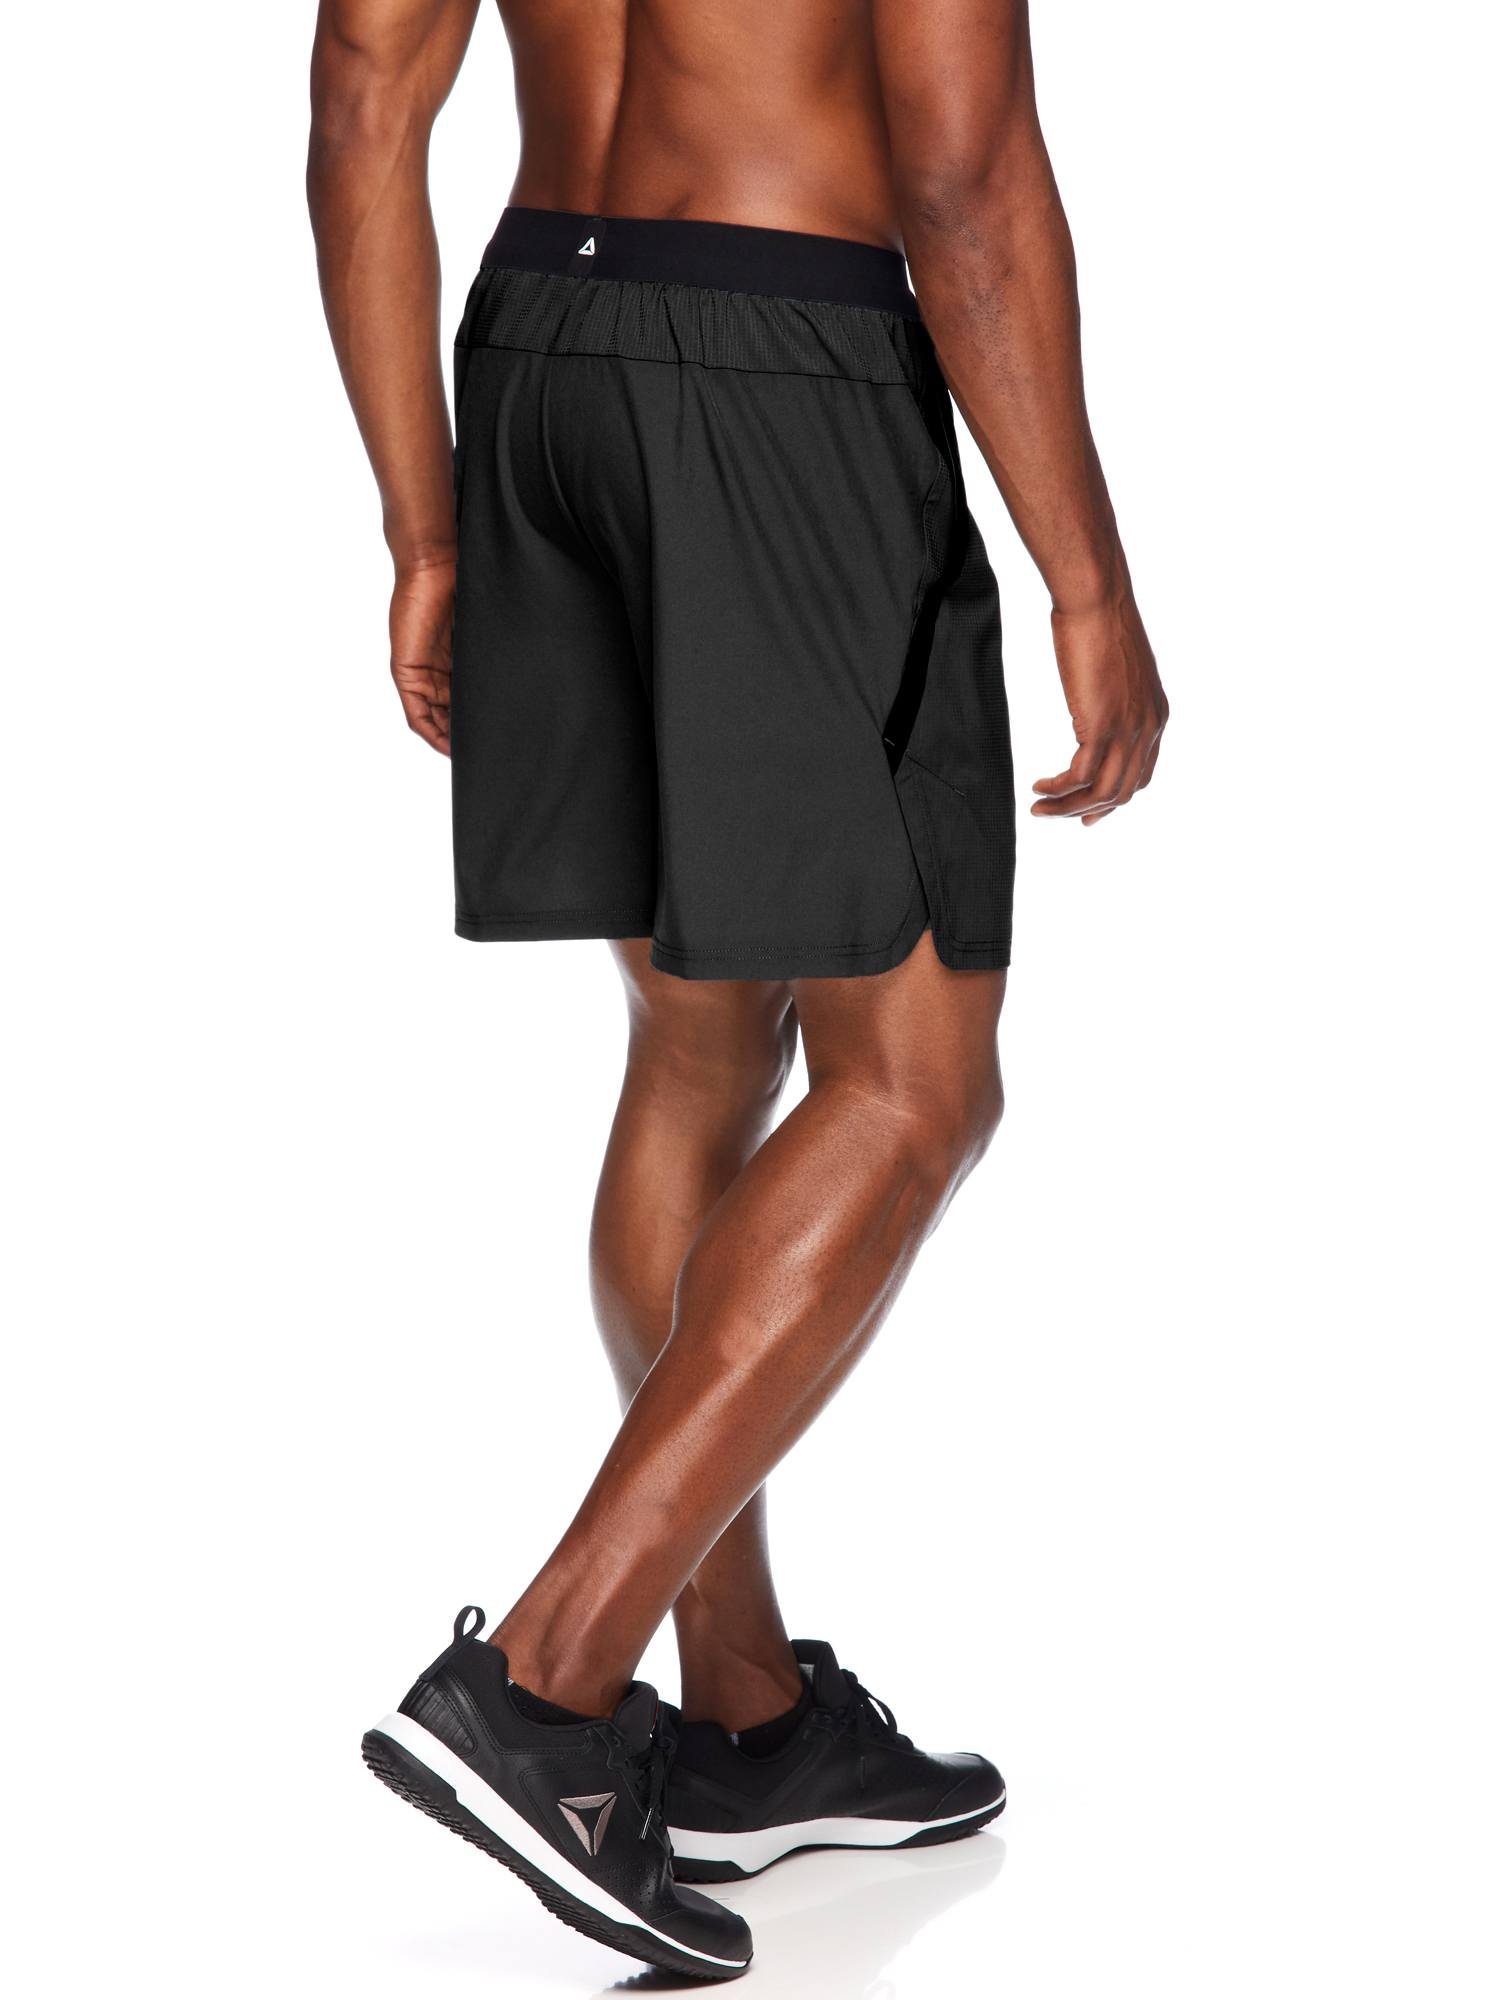 Reebok Men's Zeus Training Shorts - image 2 of 4